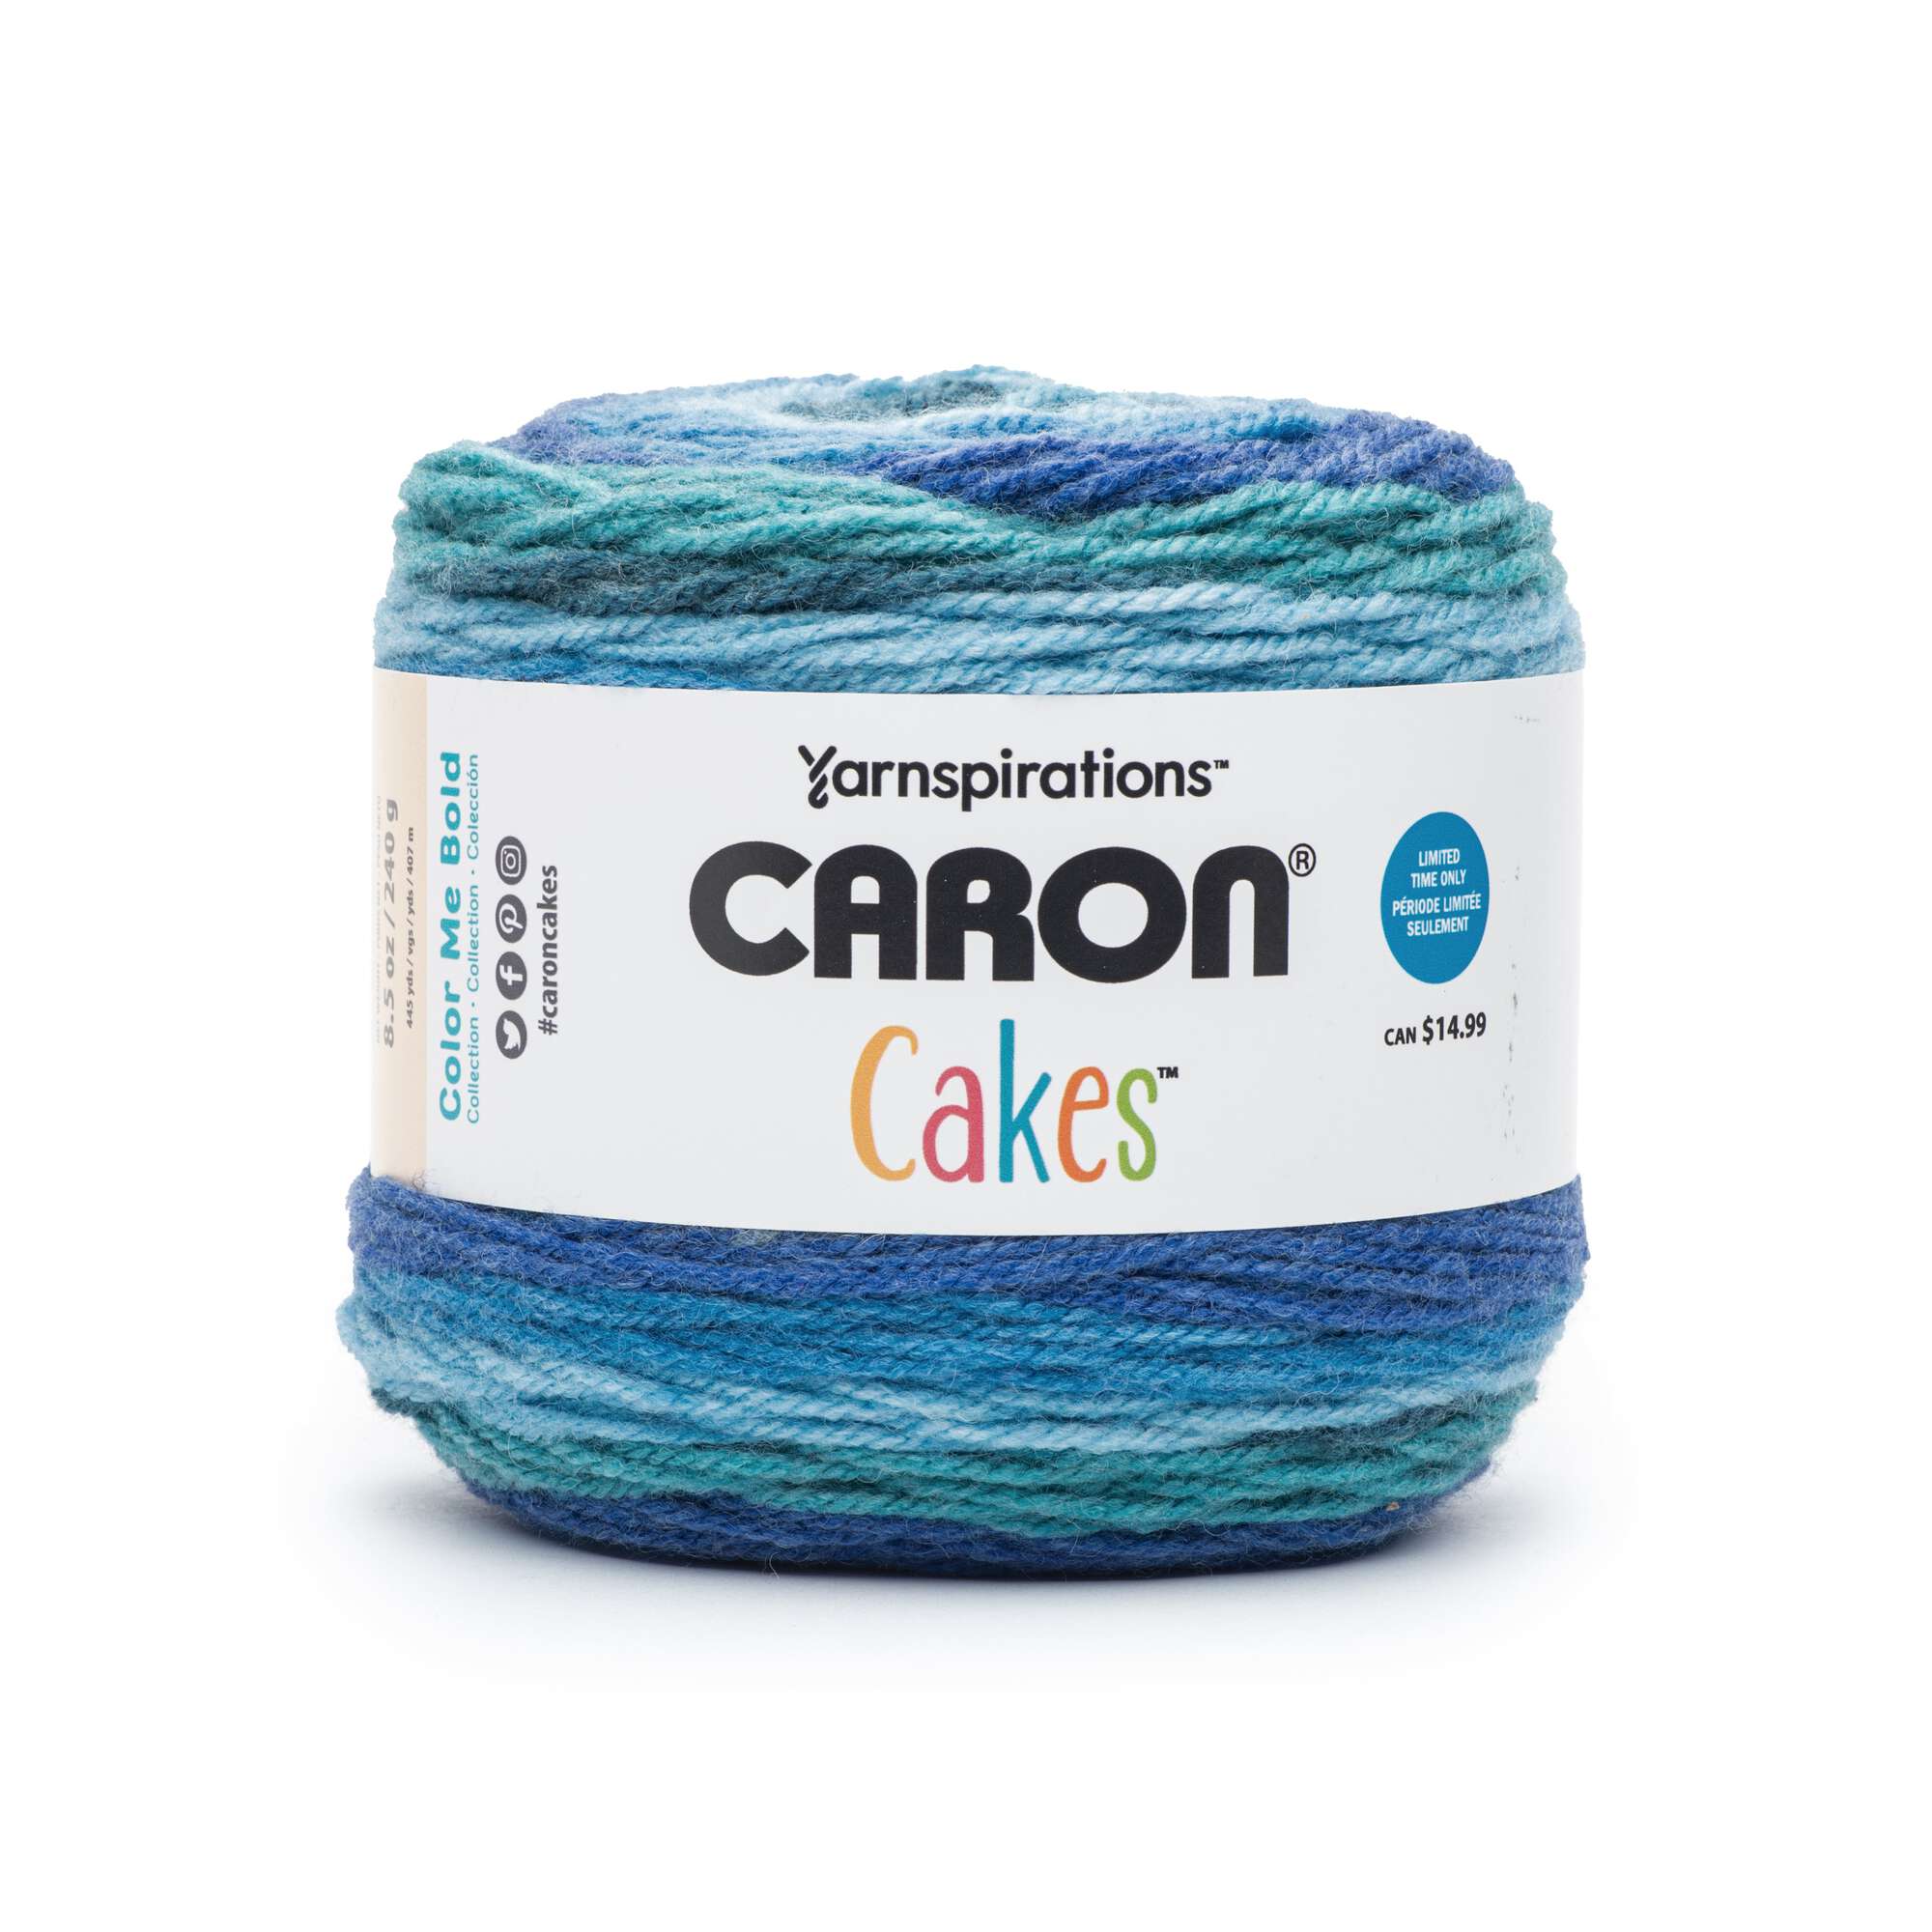 Gardenya Cake Yarn | Vlnika - yarn, wool warehouse - buy all of your yarn  wool, needles, and other knitting supplies online